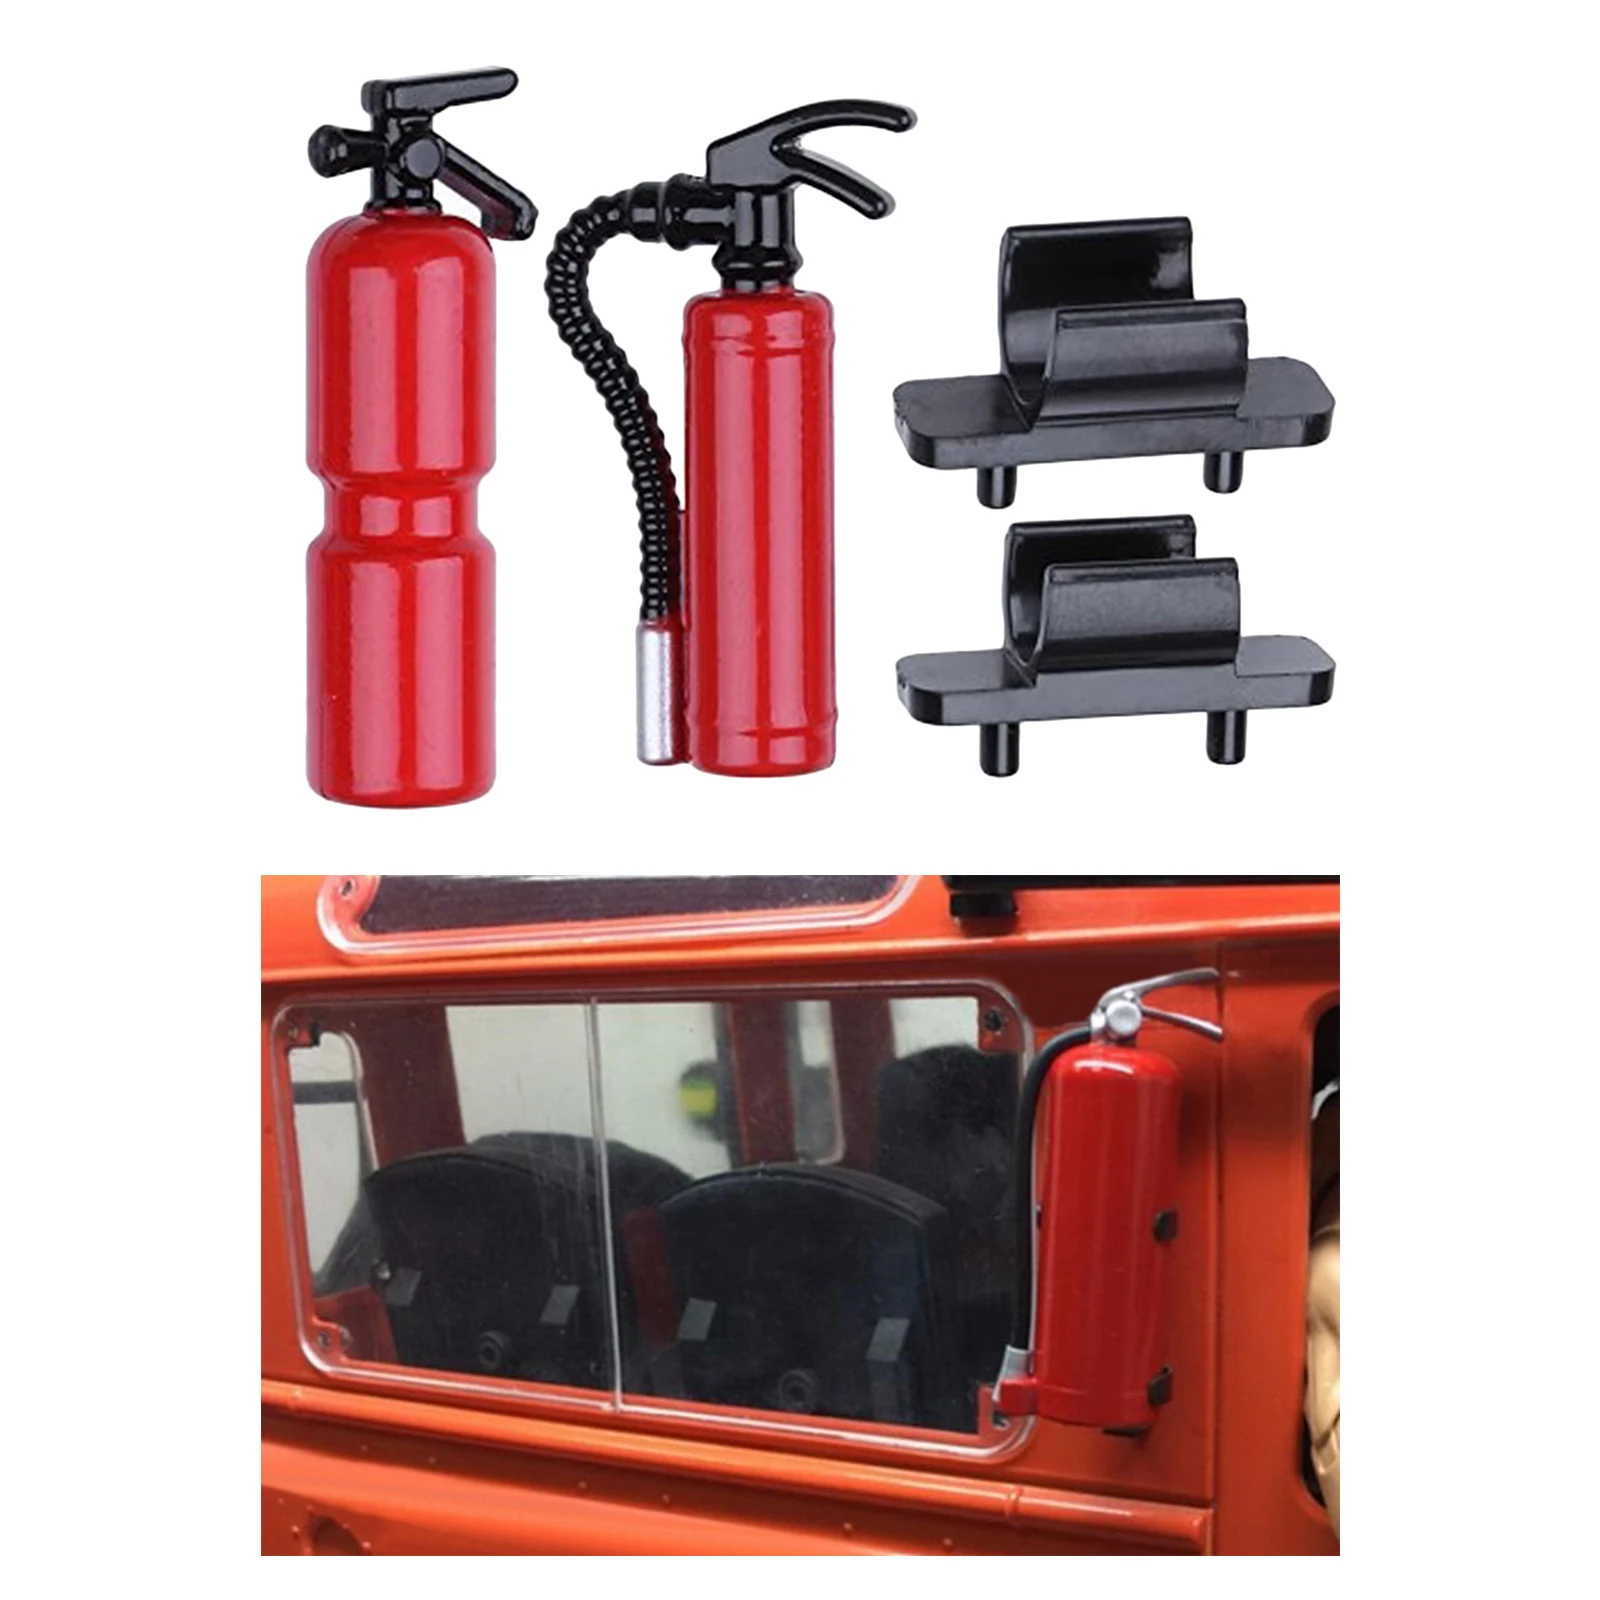 2x Fire Extinguisher for D90 SCX10 D110 Wrangler 1:10 RC Crawler Parts